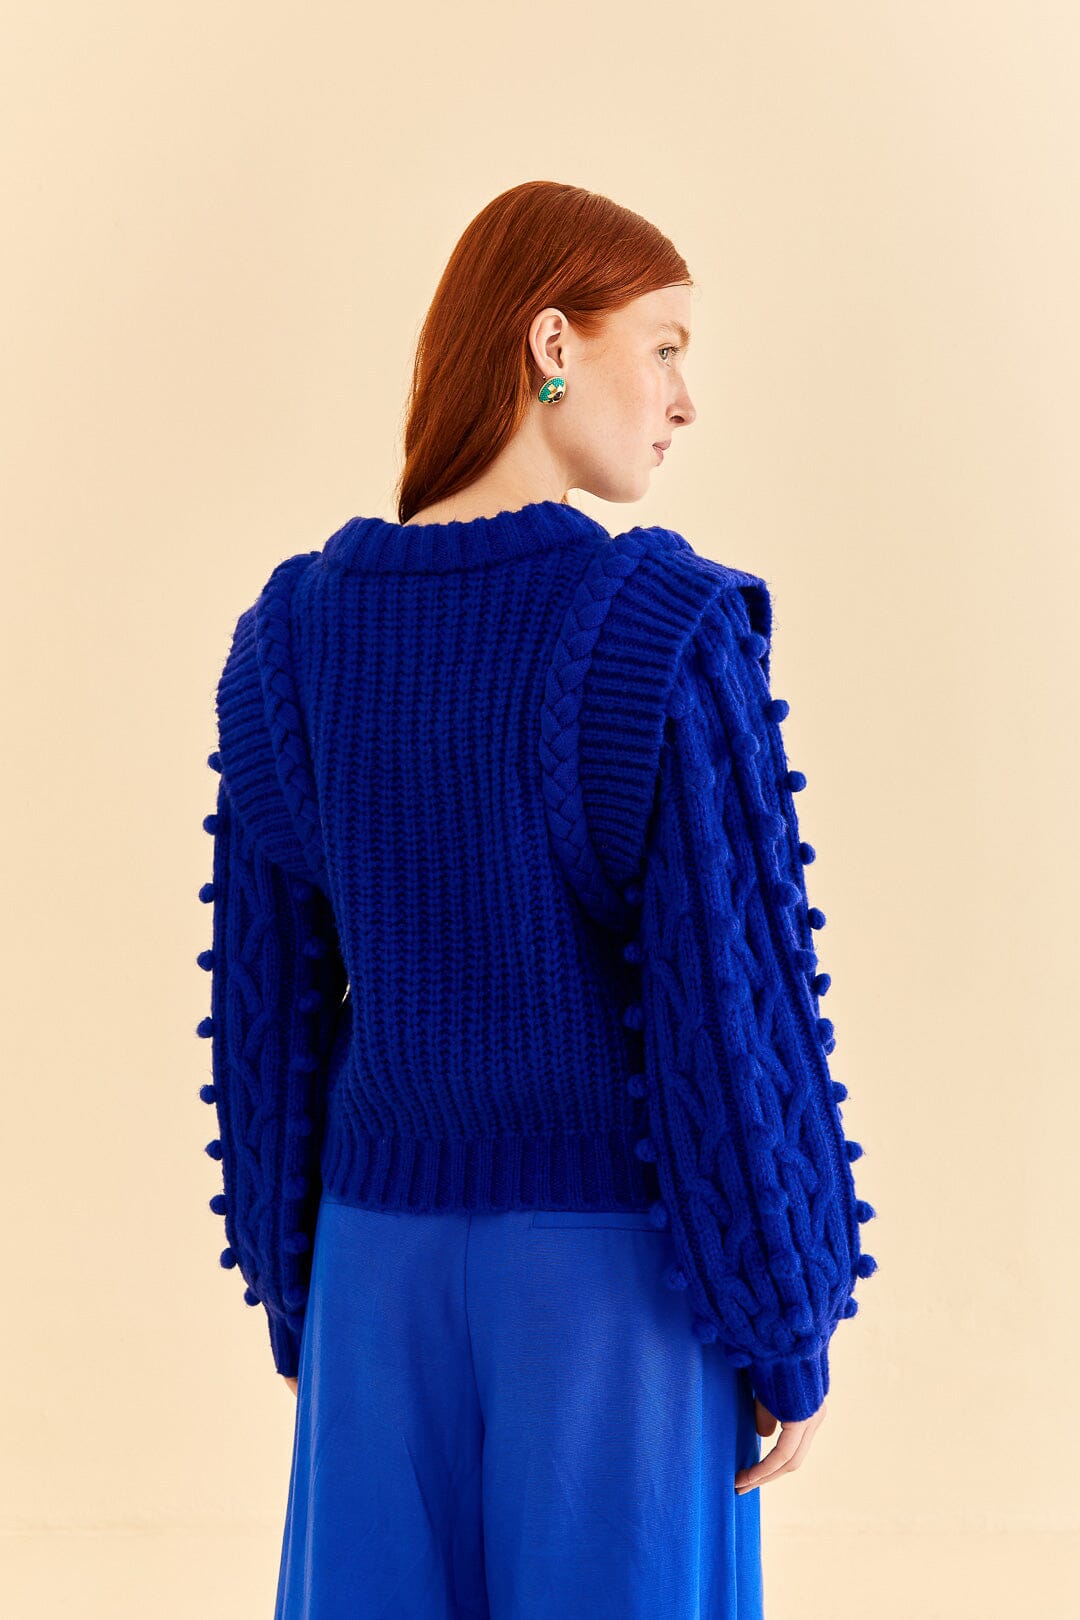 Blue Braided Sweater